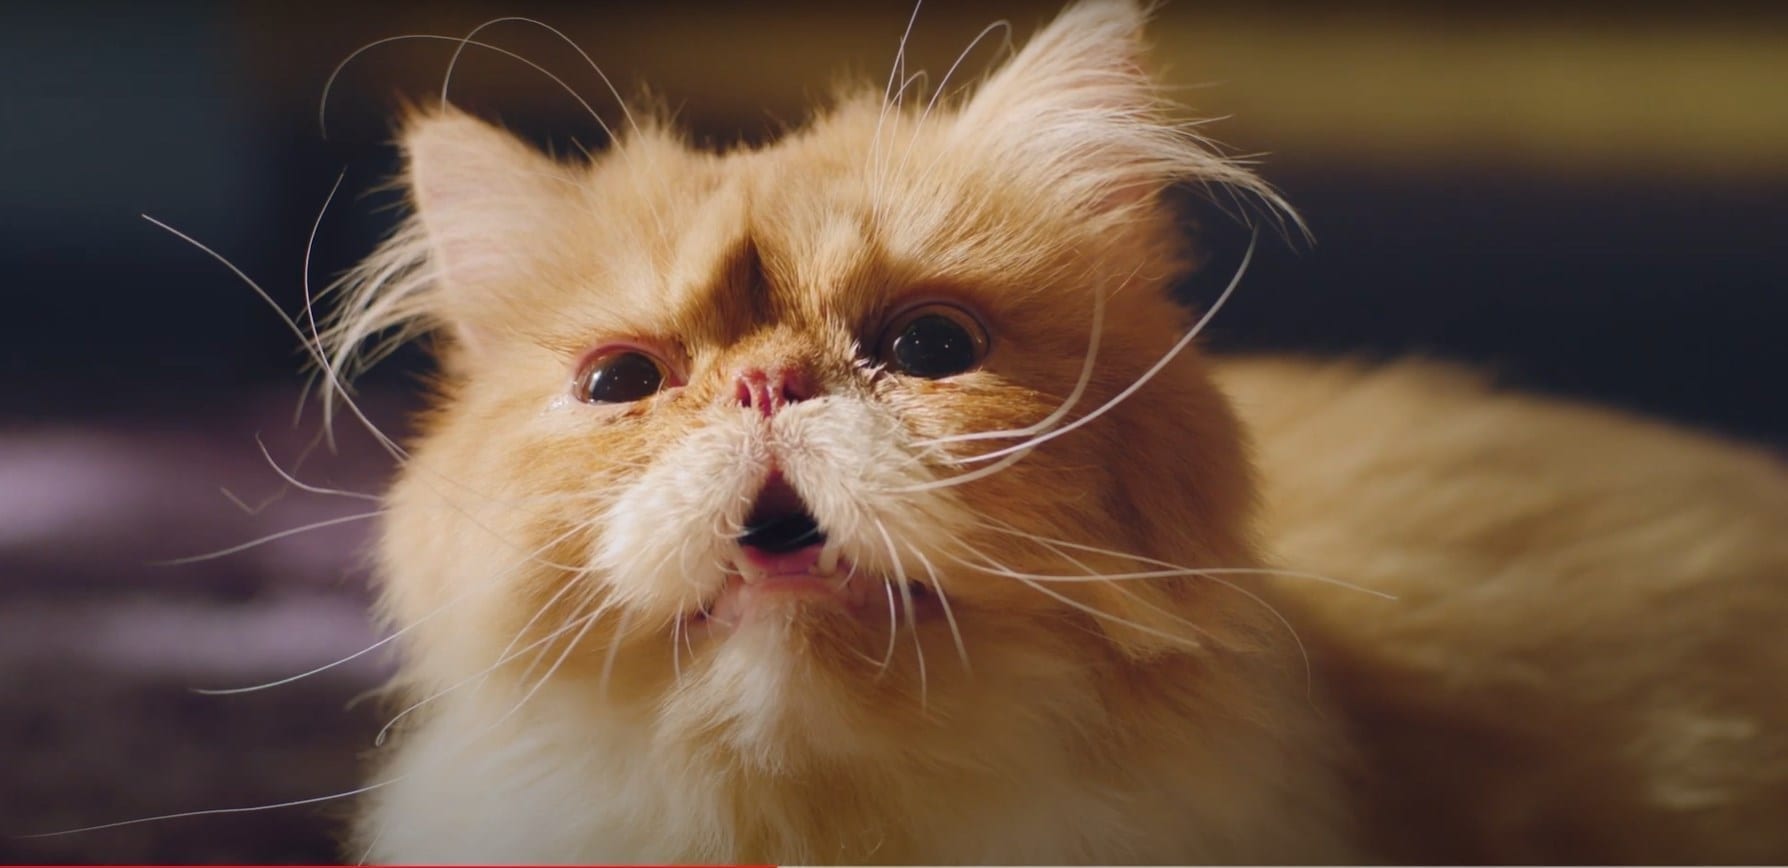 Midea funny cat videos - DAILY COMMERCIALS